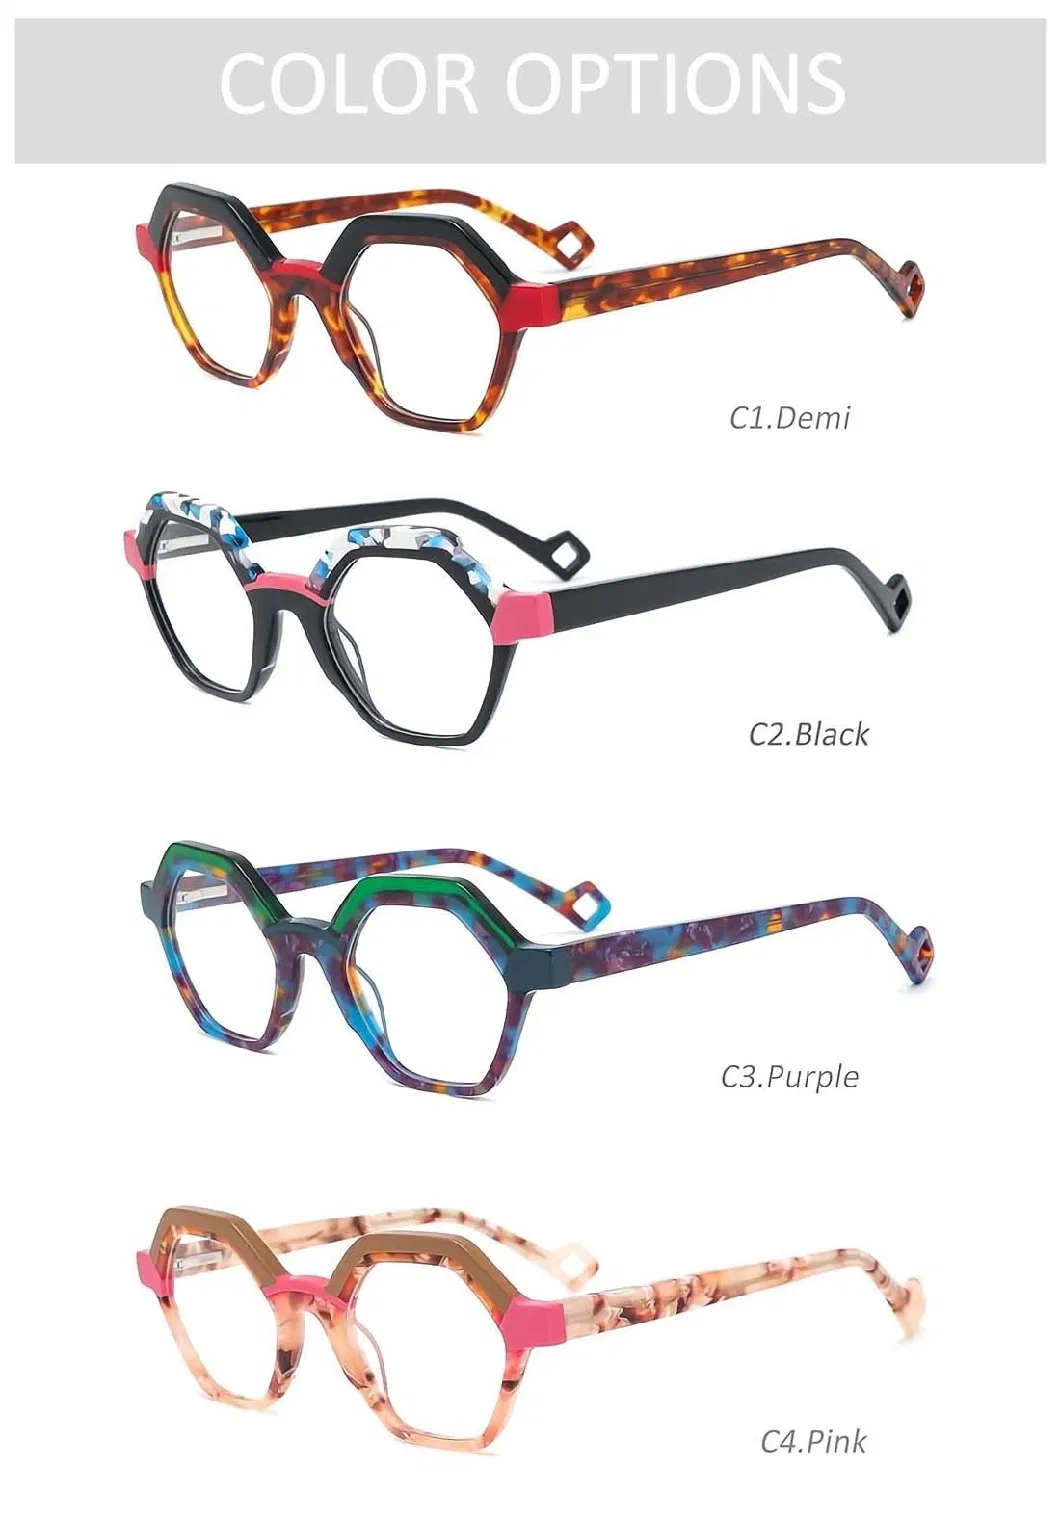 Gd Italy Design Acetate Eyeglasses Women Optical Frames Glasses Colorful Eyewear Frames